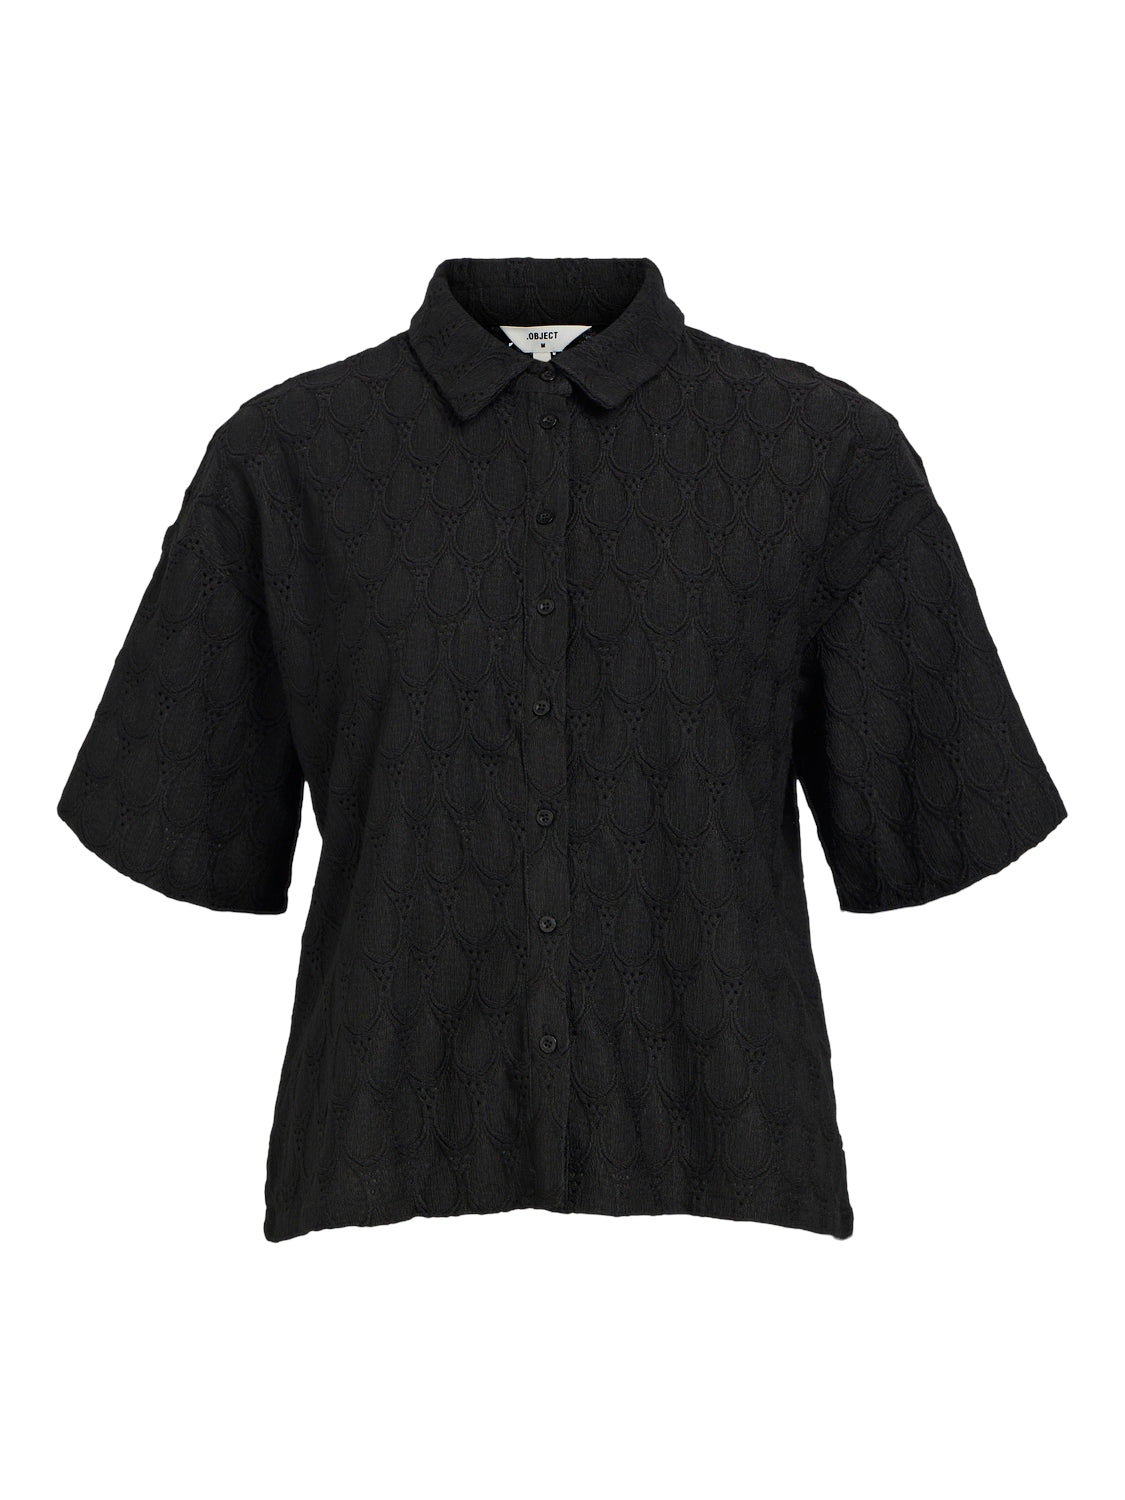 Object Feodora 2/4 Shirt, Black